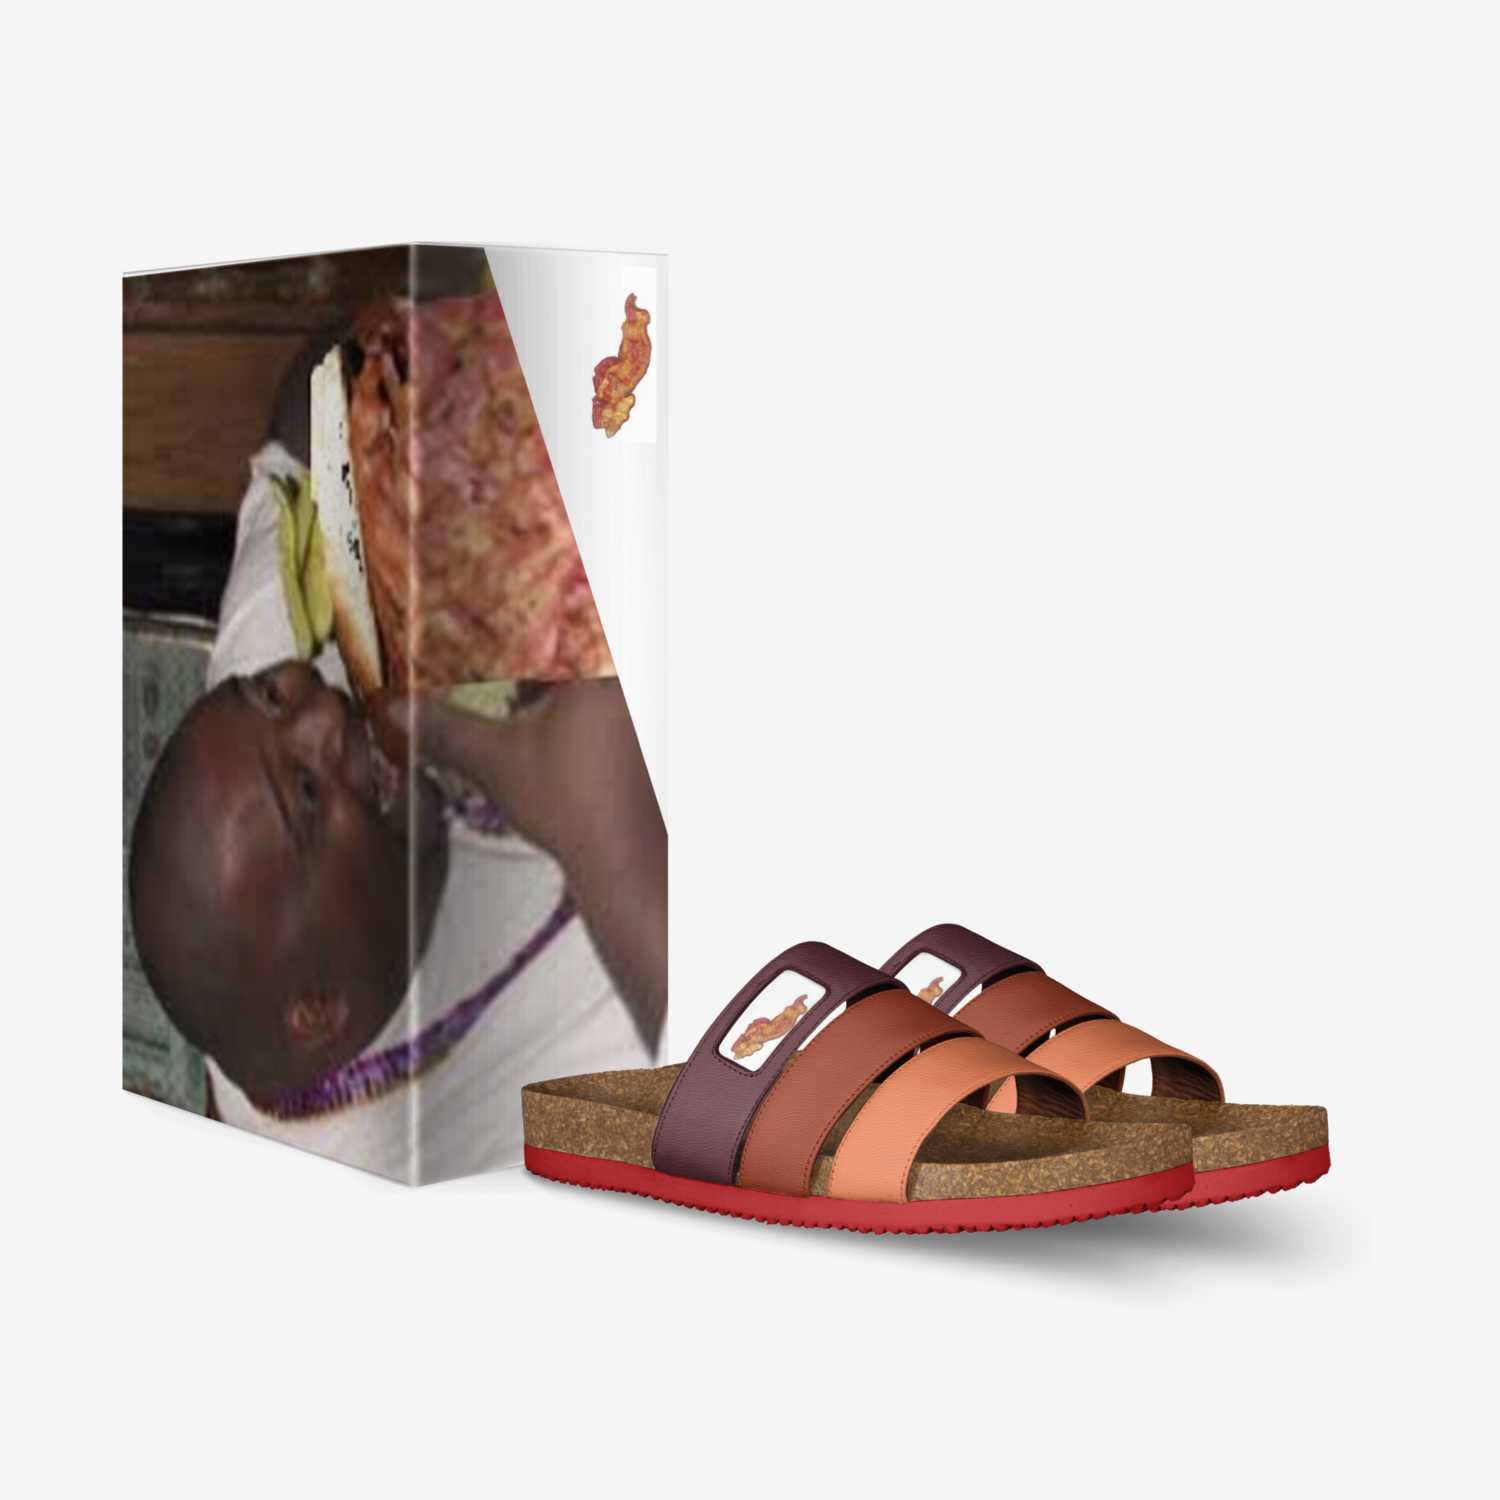 Bacon Boys custom made in Italy shoes by Crisp E. Bacon | Box view